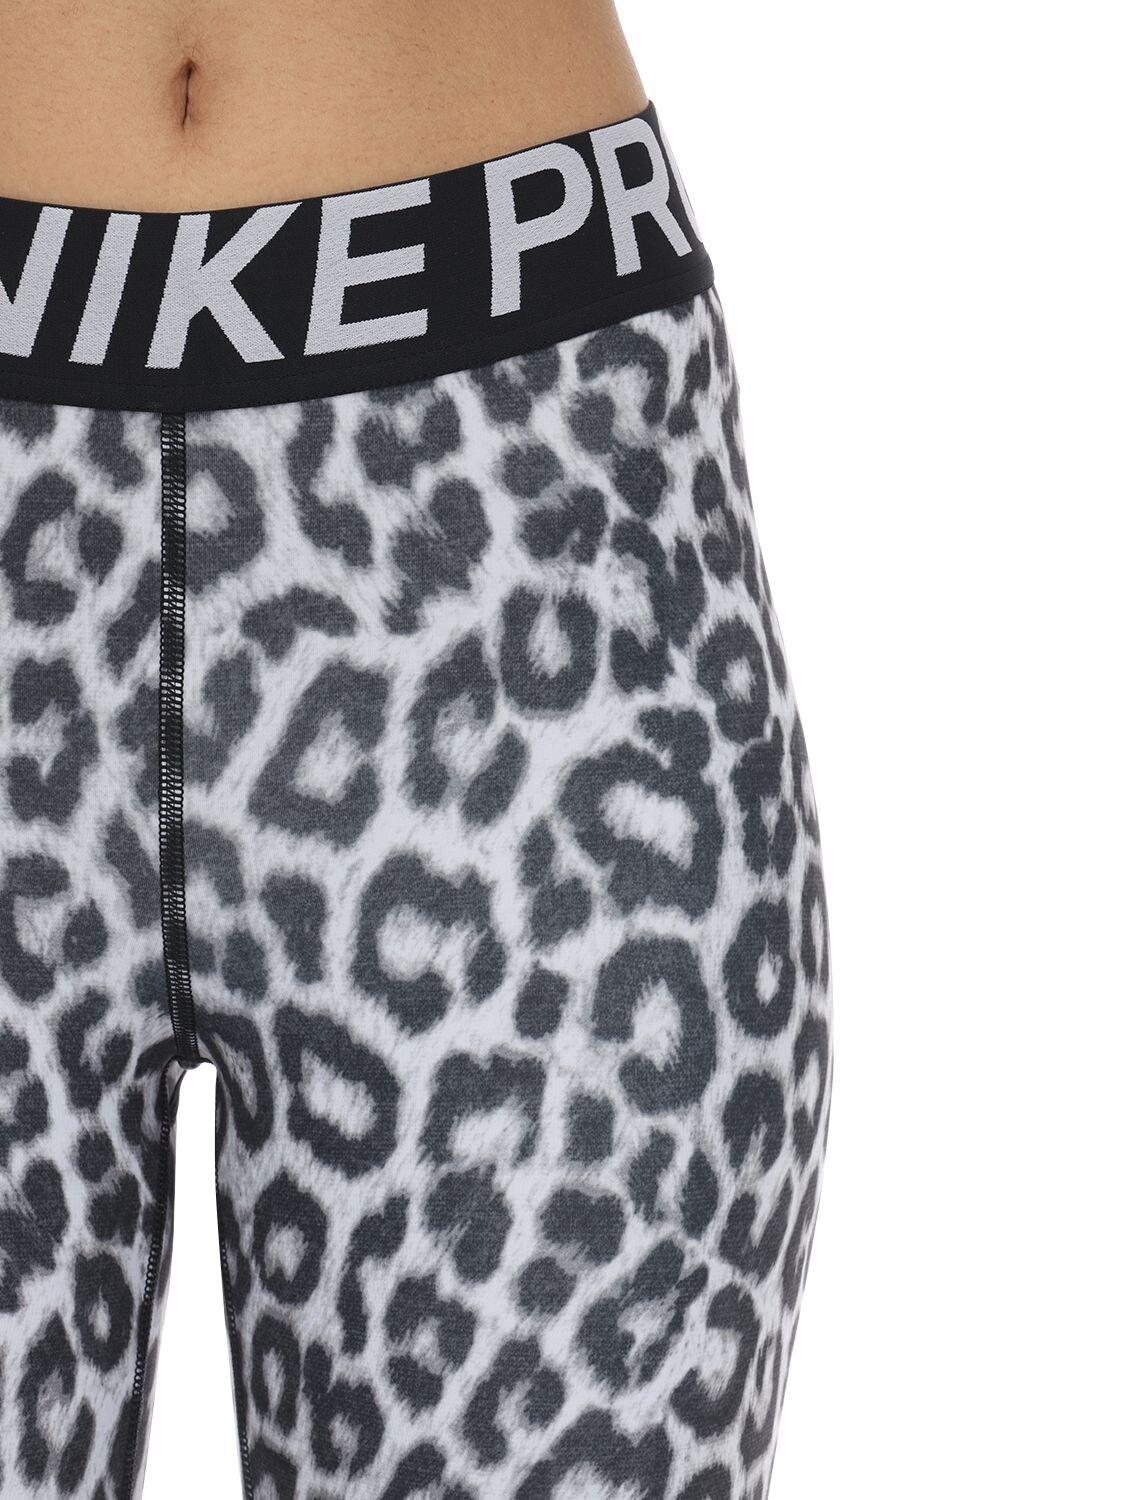 Nike Leopard Shorts in White/Black (Black) | Lyst